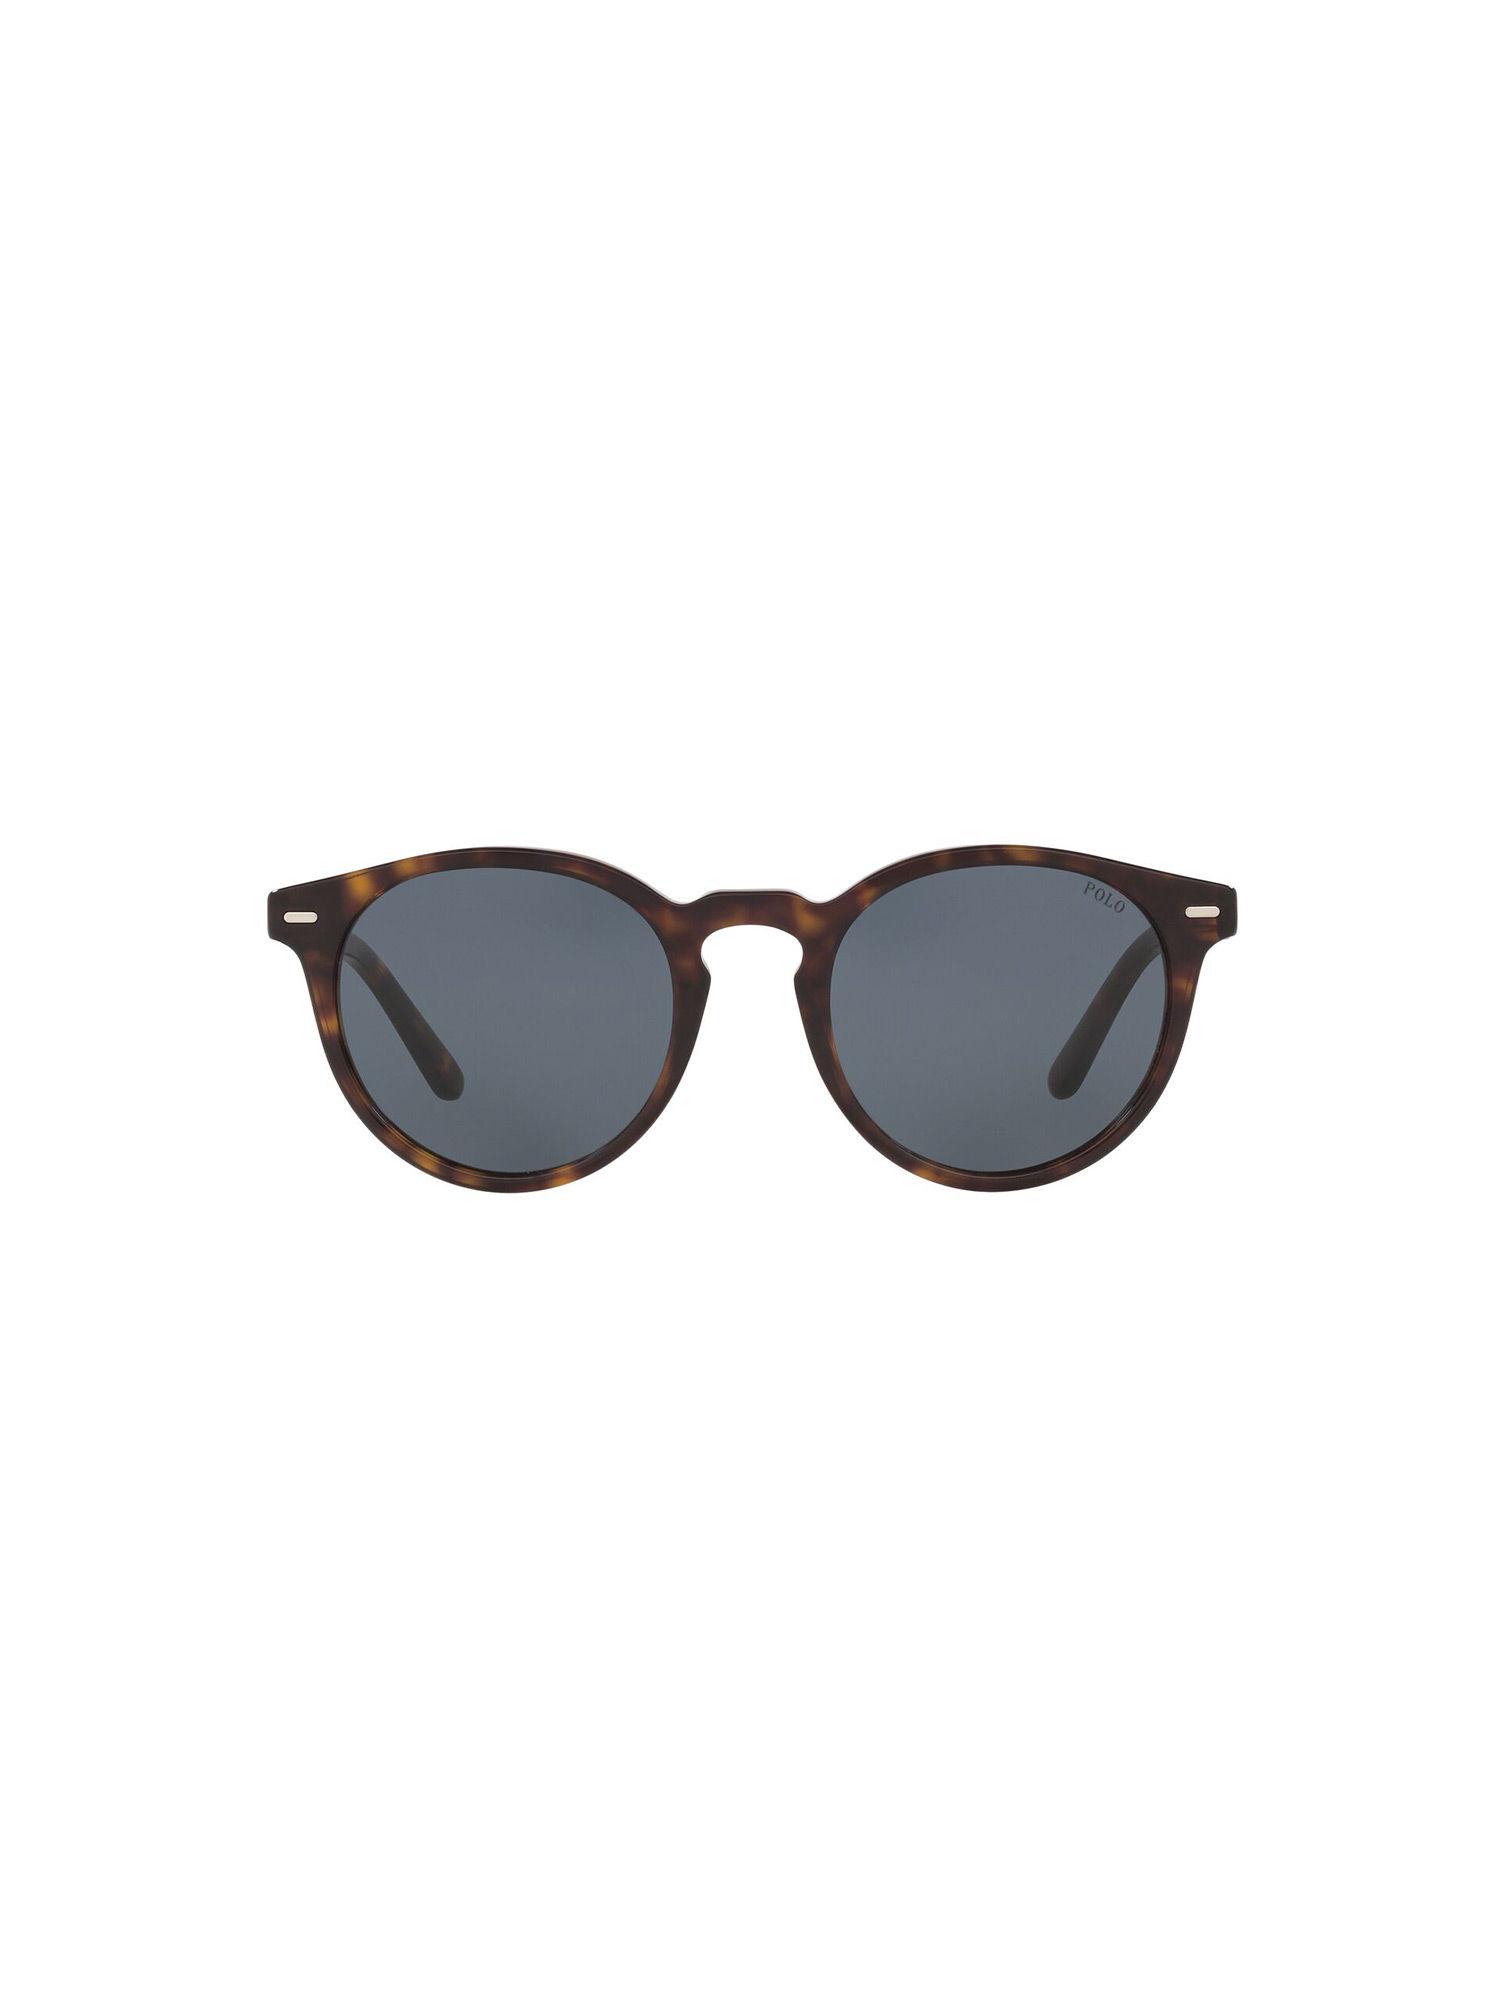 0ph4151 polo rubber blocks grey/blue lens phantos male sunglasses